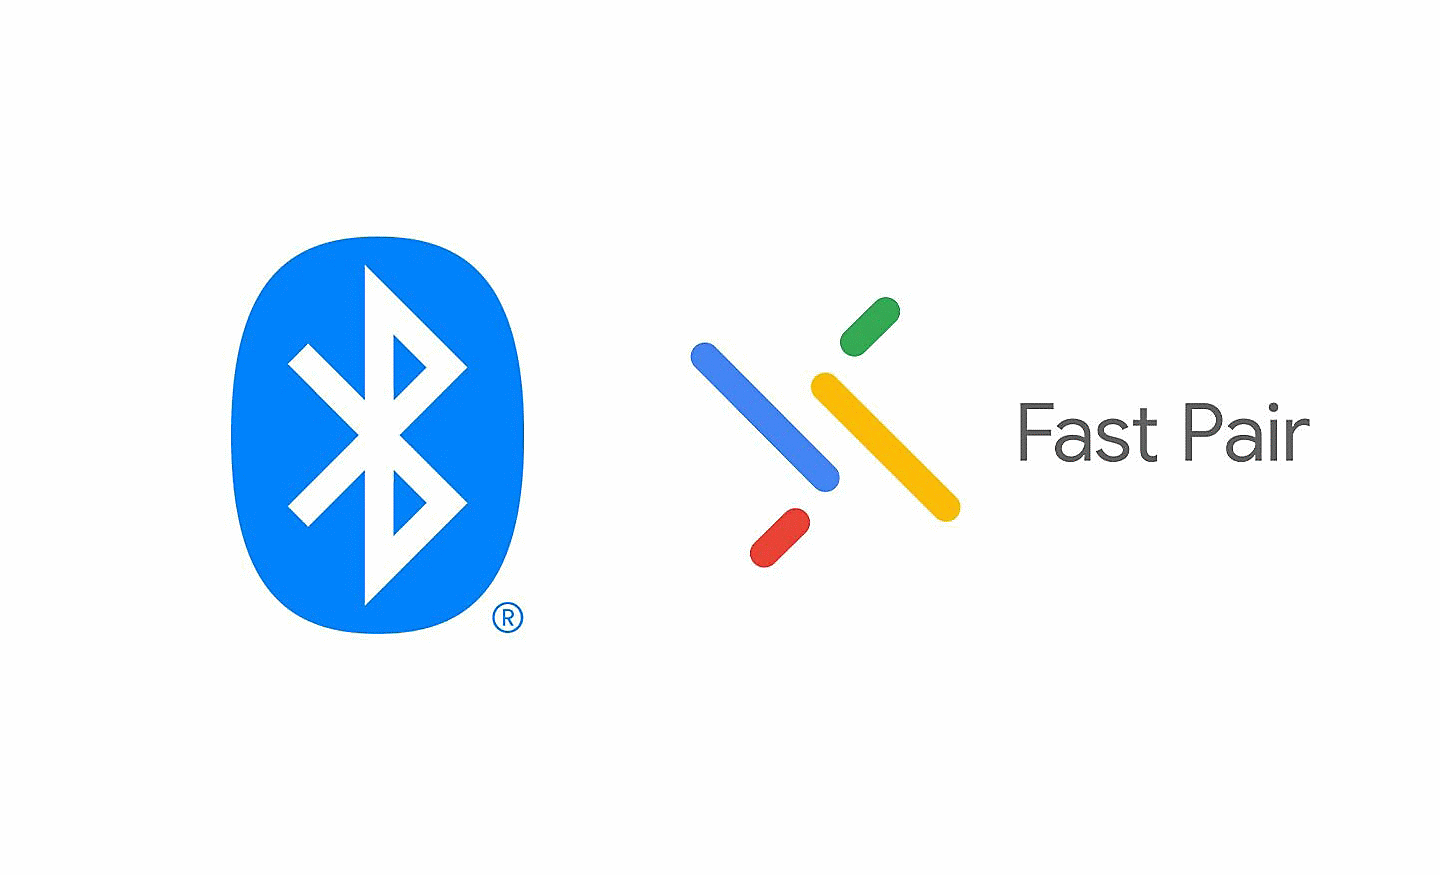 Niebieskie logo Bluetooth obok logo Google Fast Pair